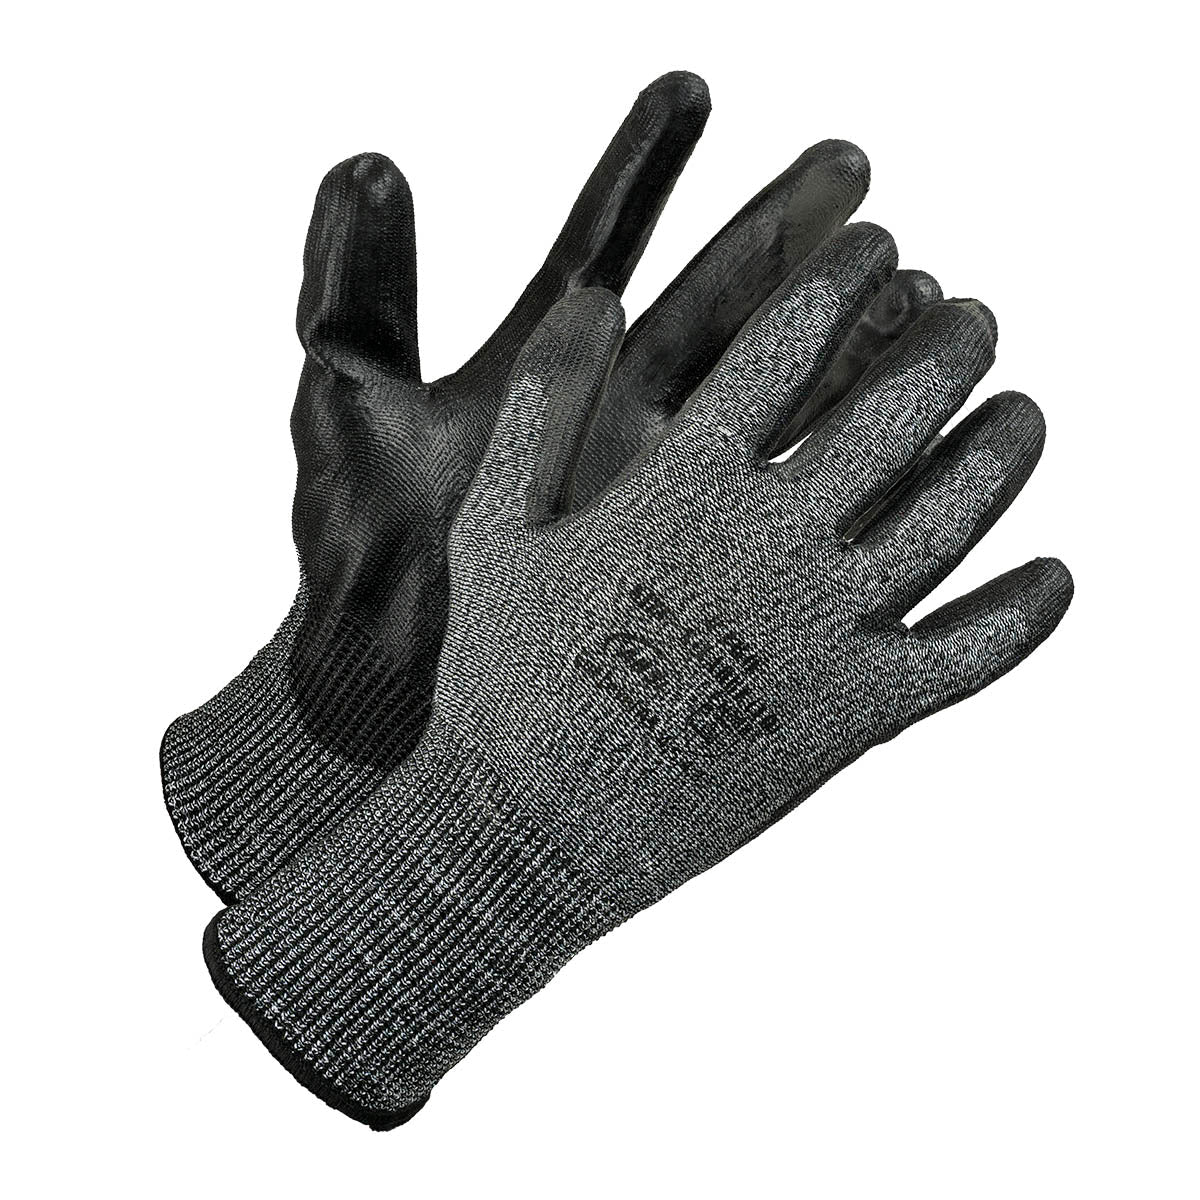 Palm Coated, Ansi Cut Level 5, A5, HPPE Glove